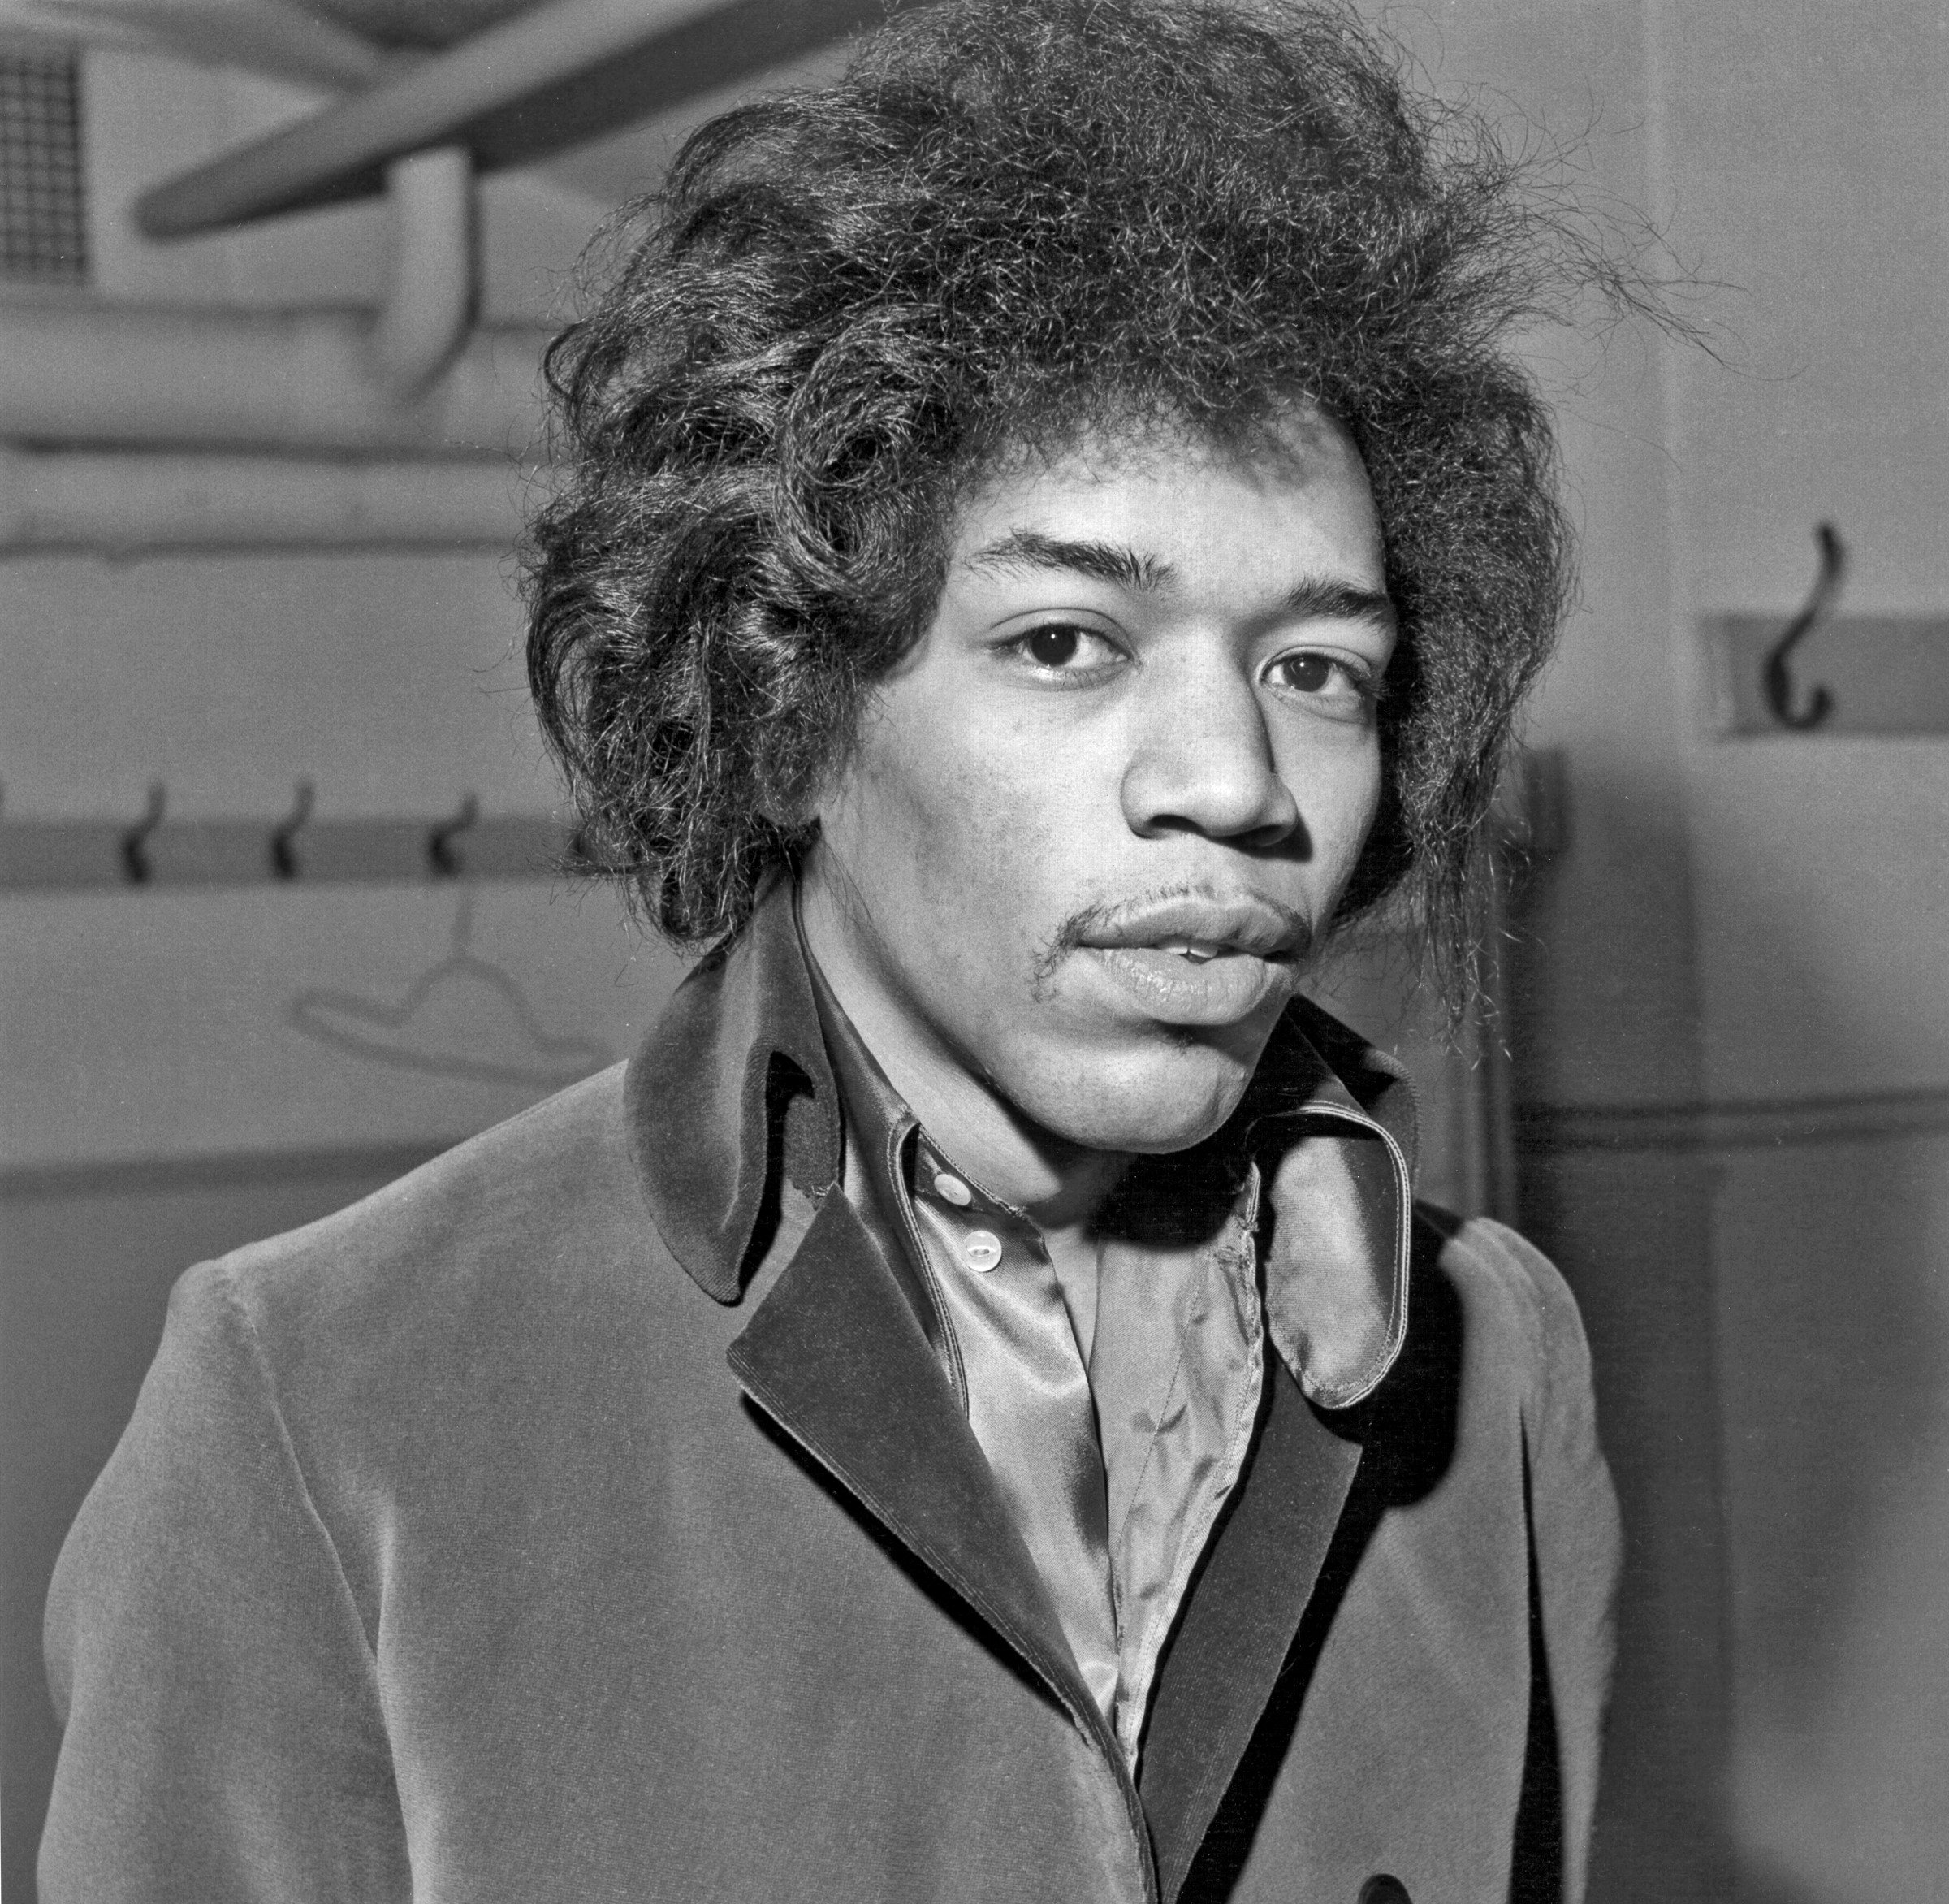 Jimi Hendrix in a coat